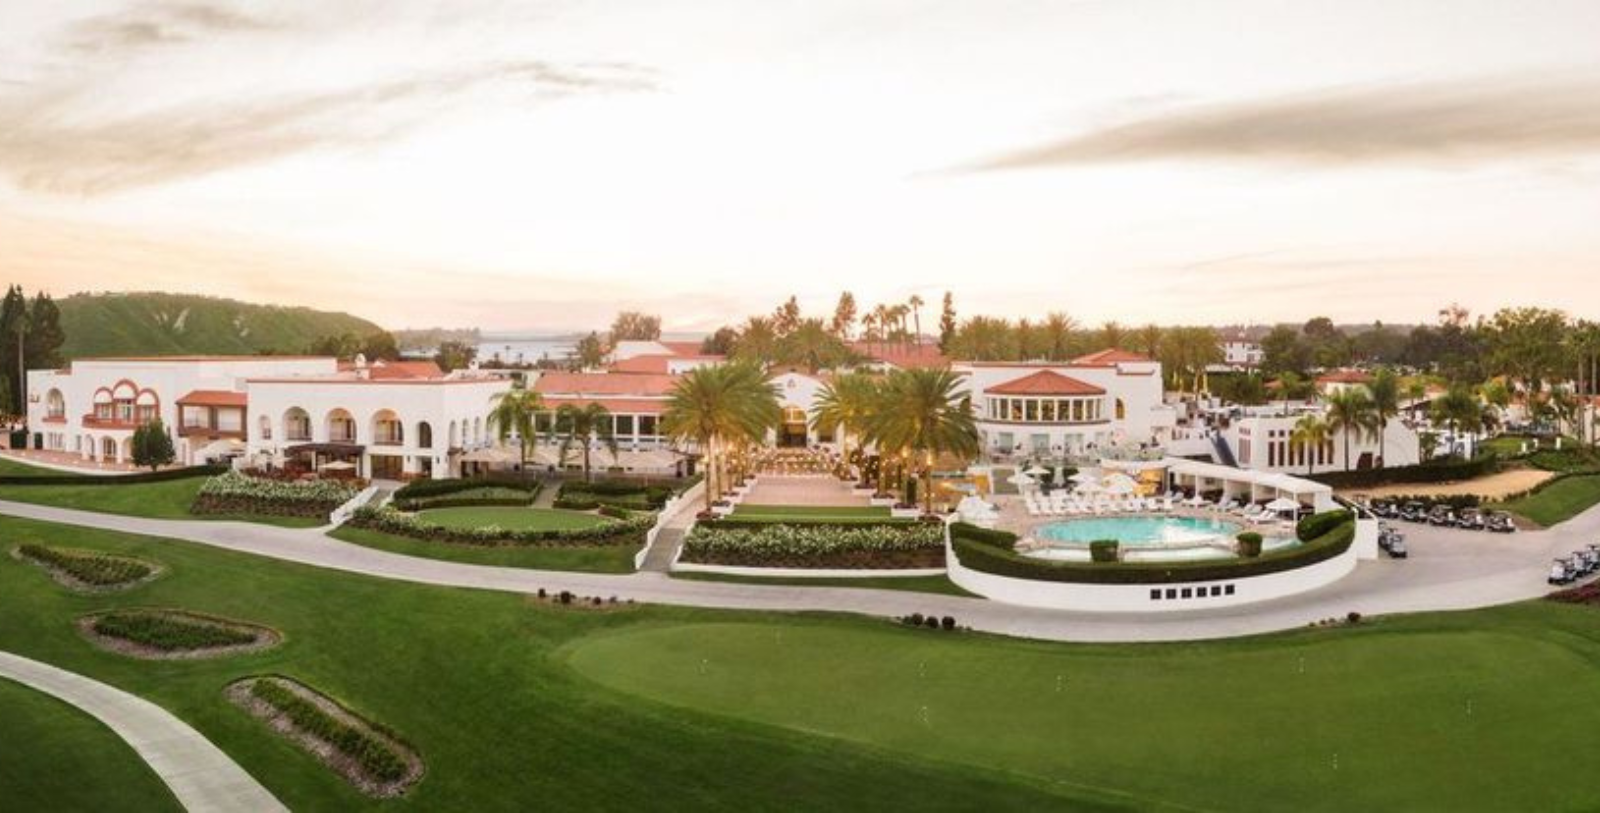 Image of Hotel Exterior & Outdoor Pool, Omni La Costa Resort, Carlsbad, California, 1965, Member of Historic Hotels of America, Overview